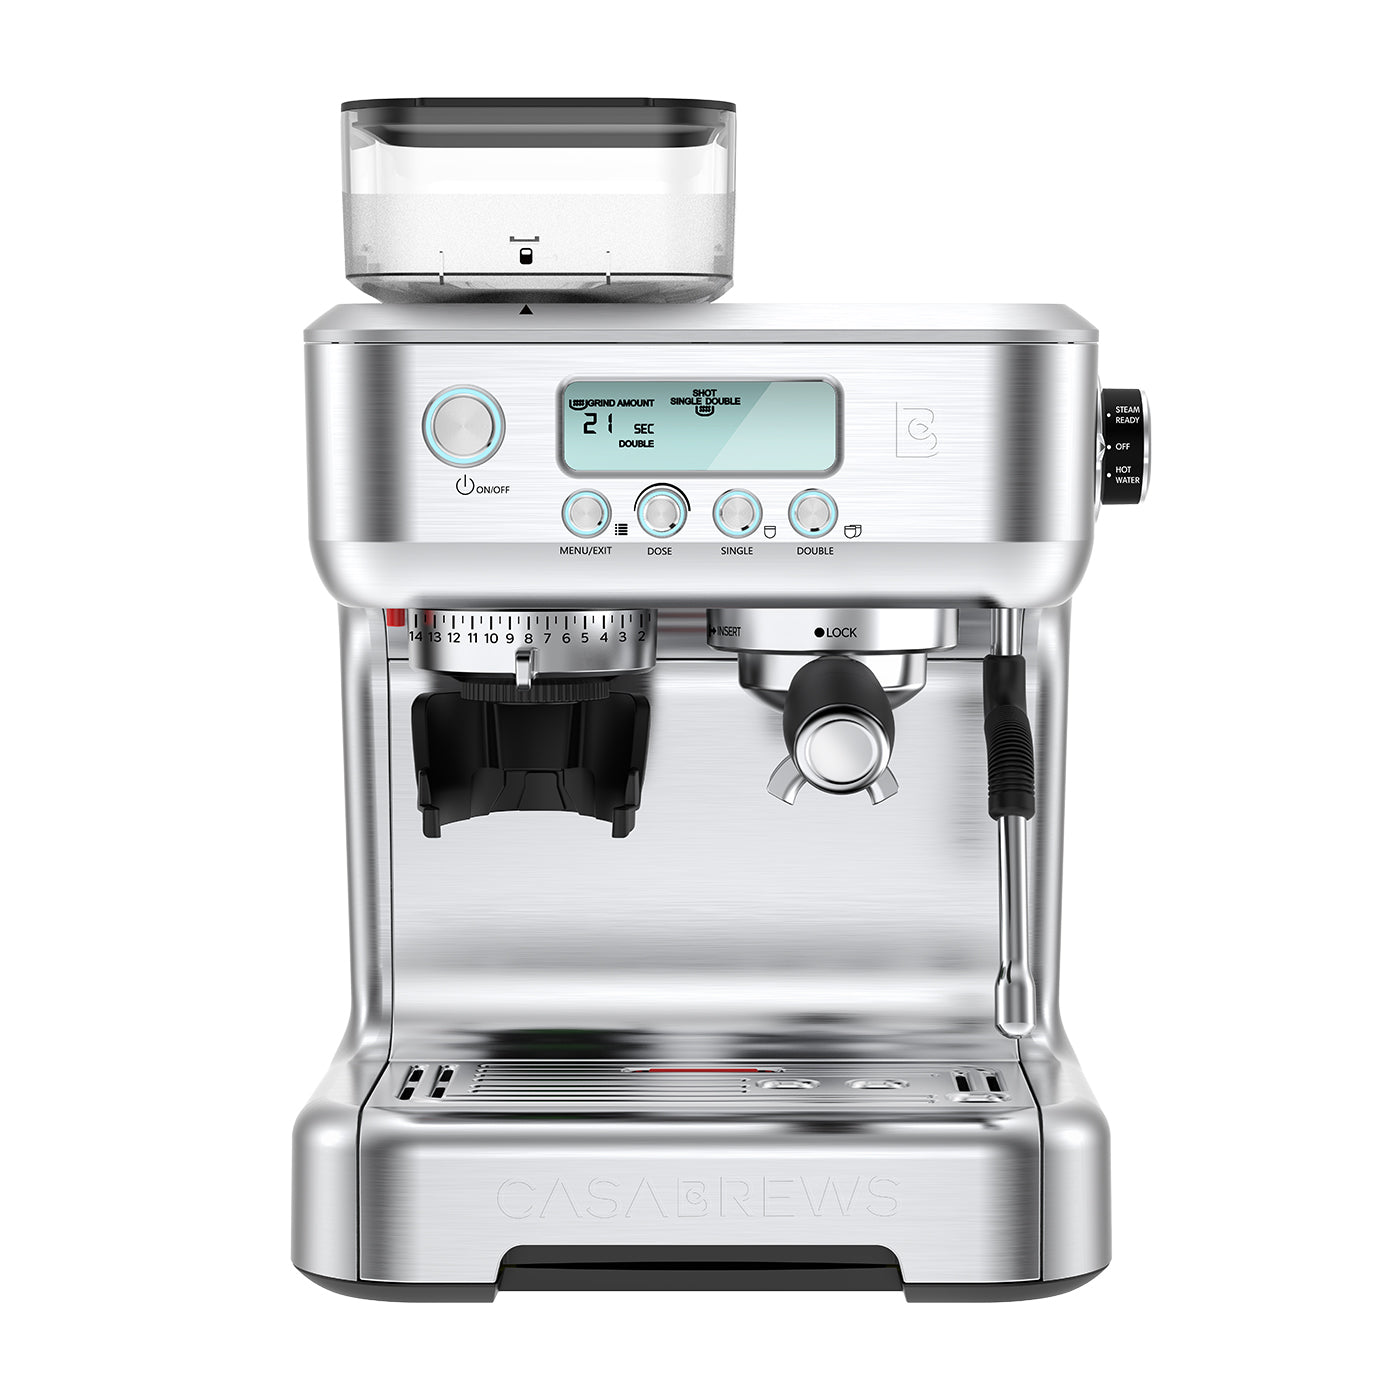 Casabrews 5700Pro Espresso Machine Image